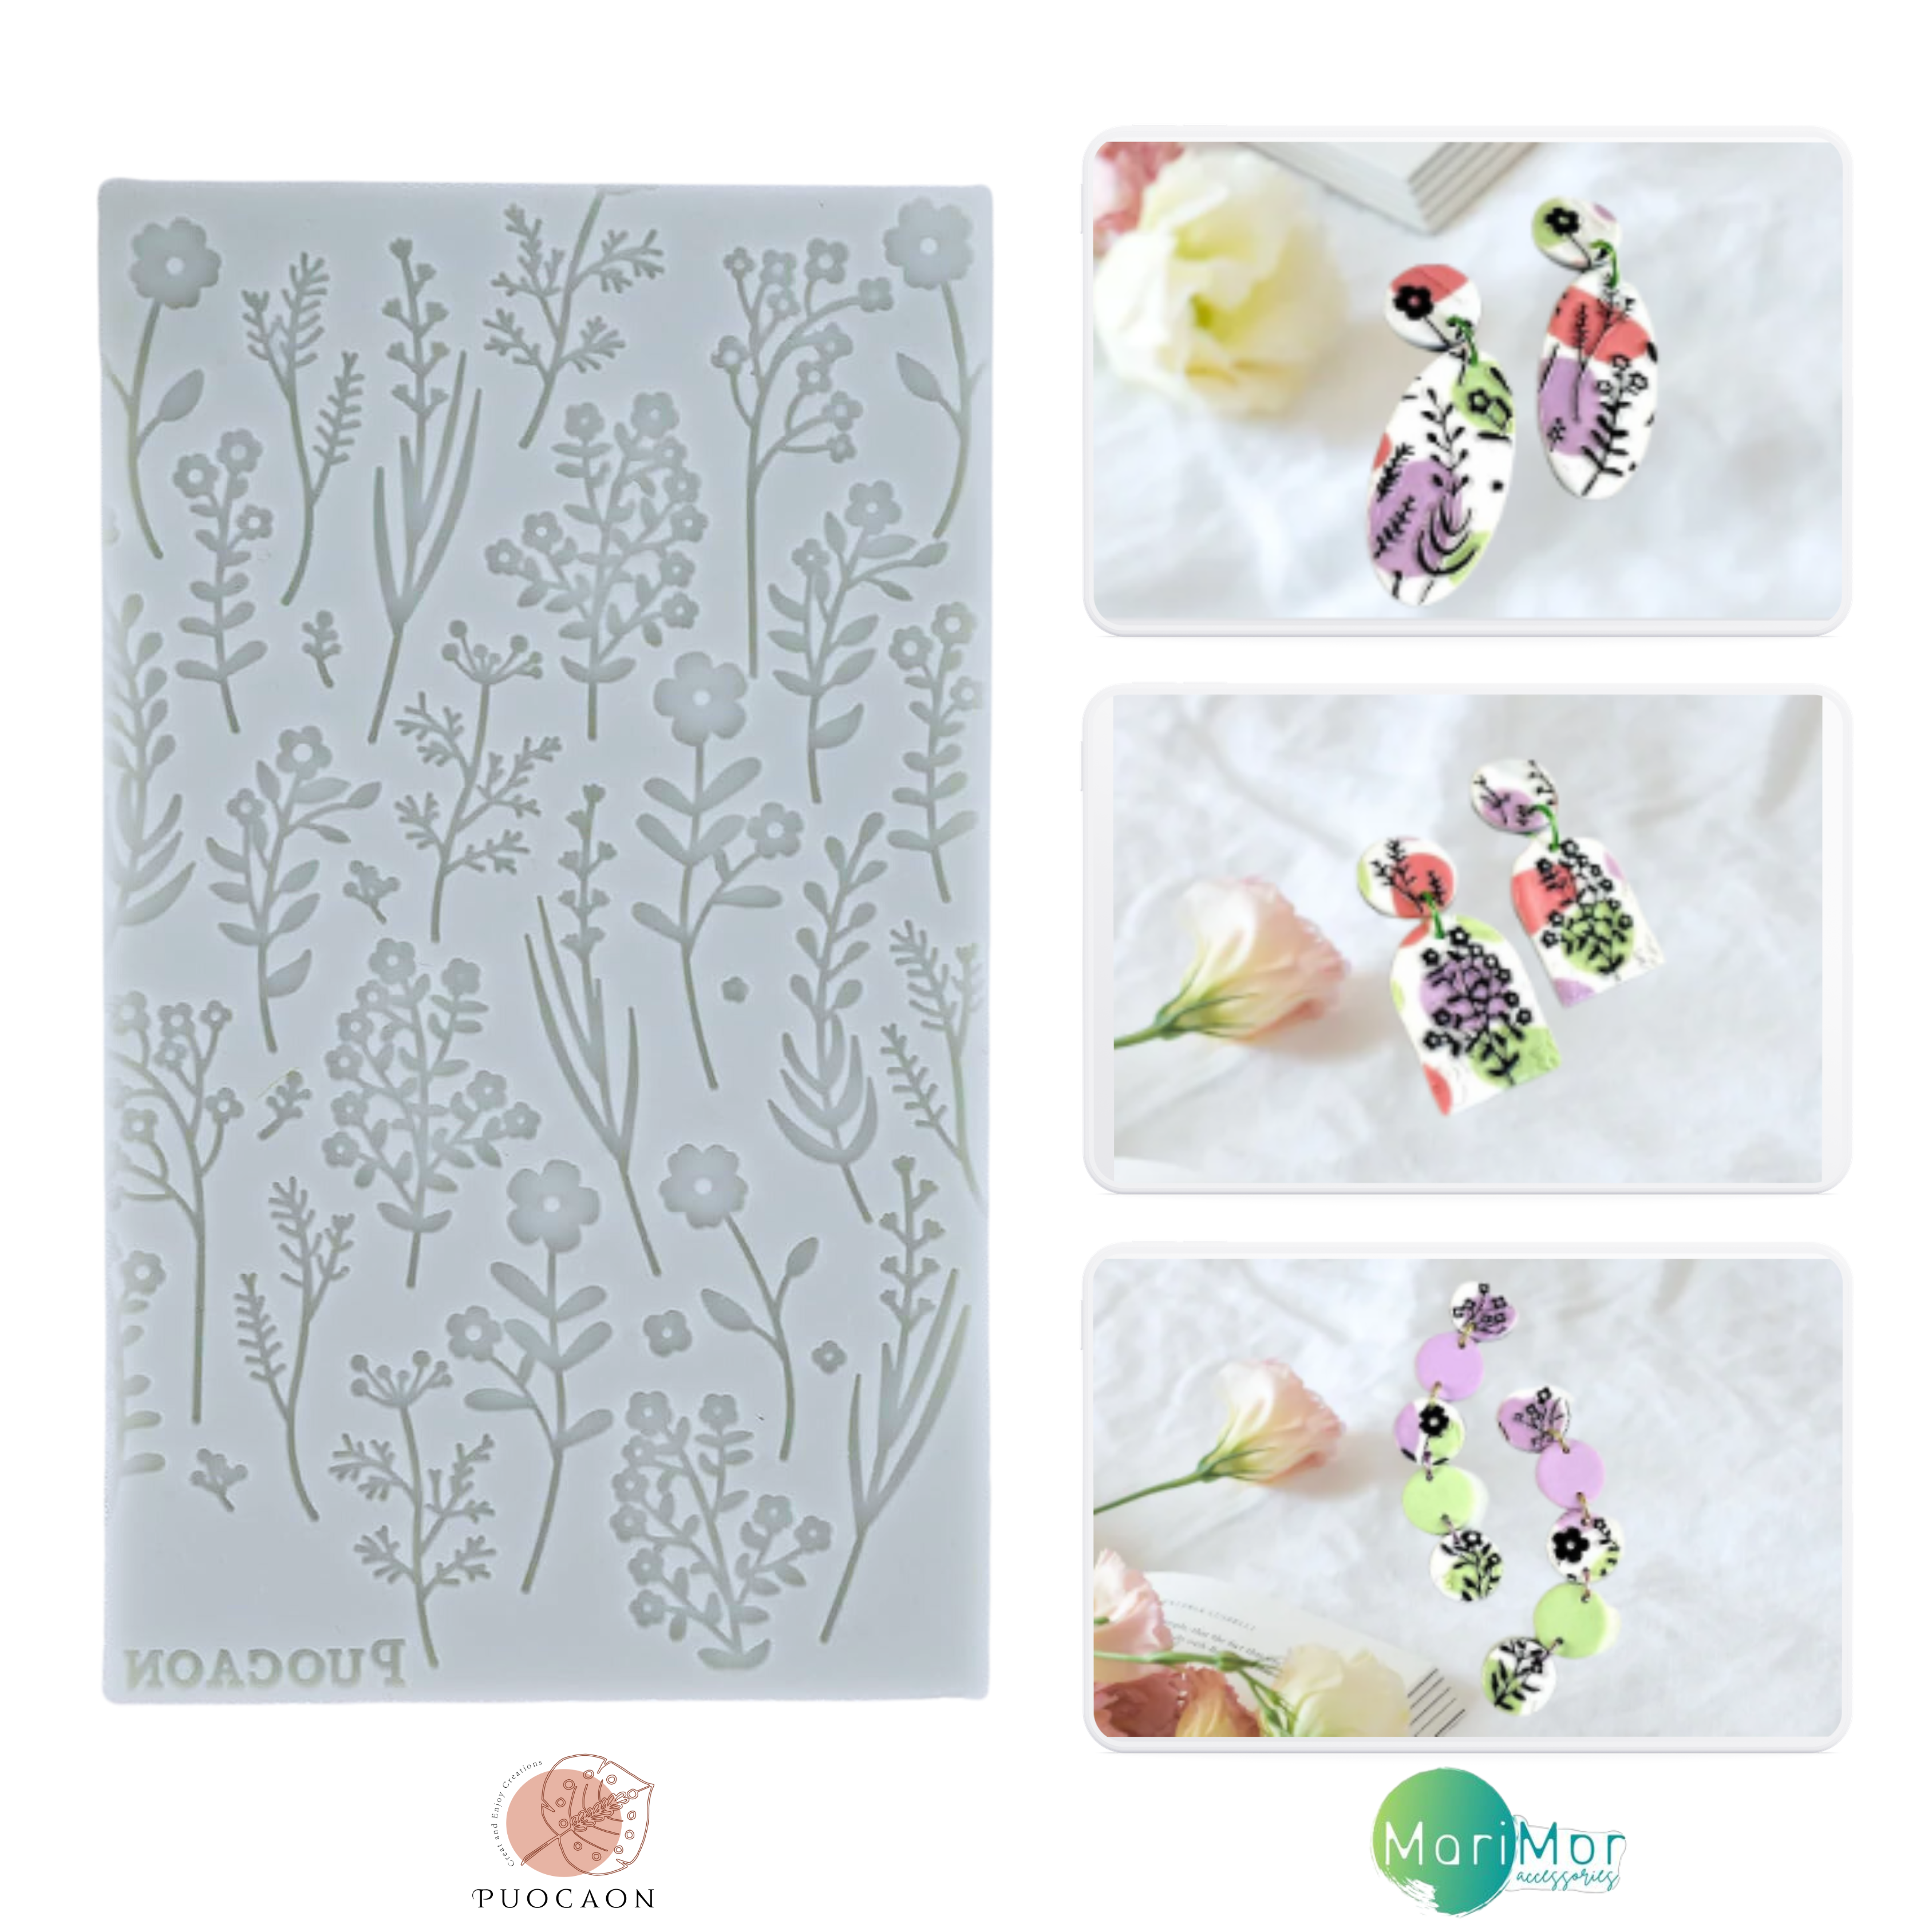 Puocaon Floral Texture Sheets Mat